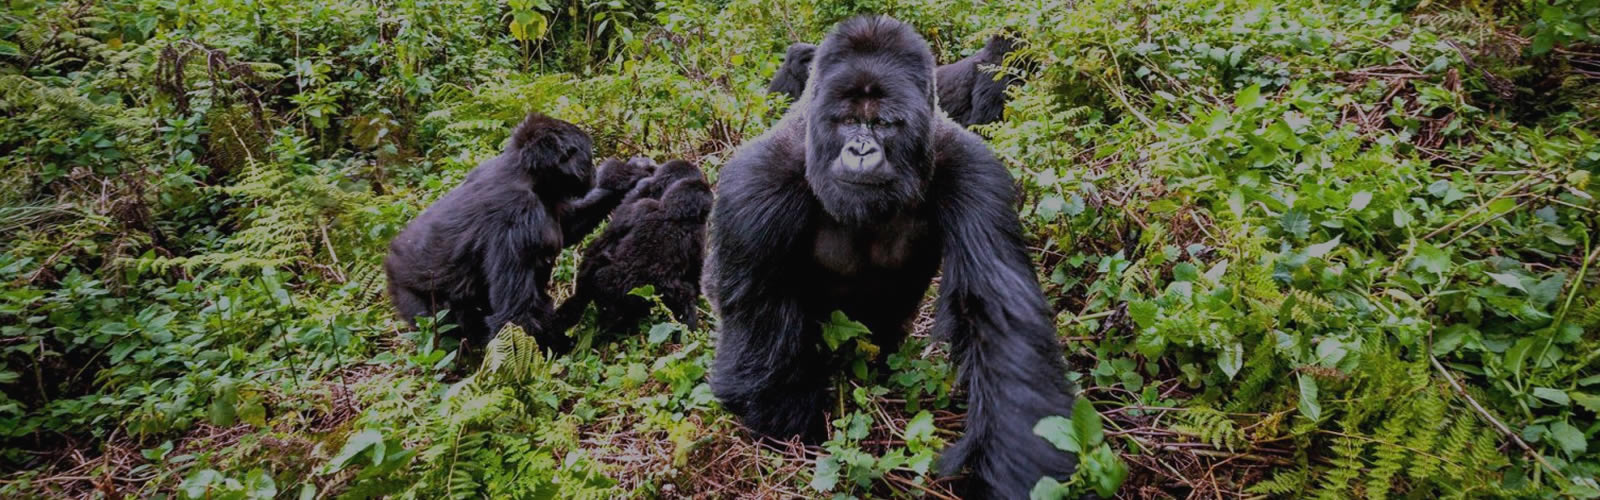 Gorilla Trekking Tours In DR Congo